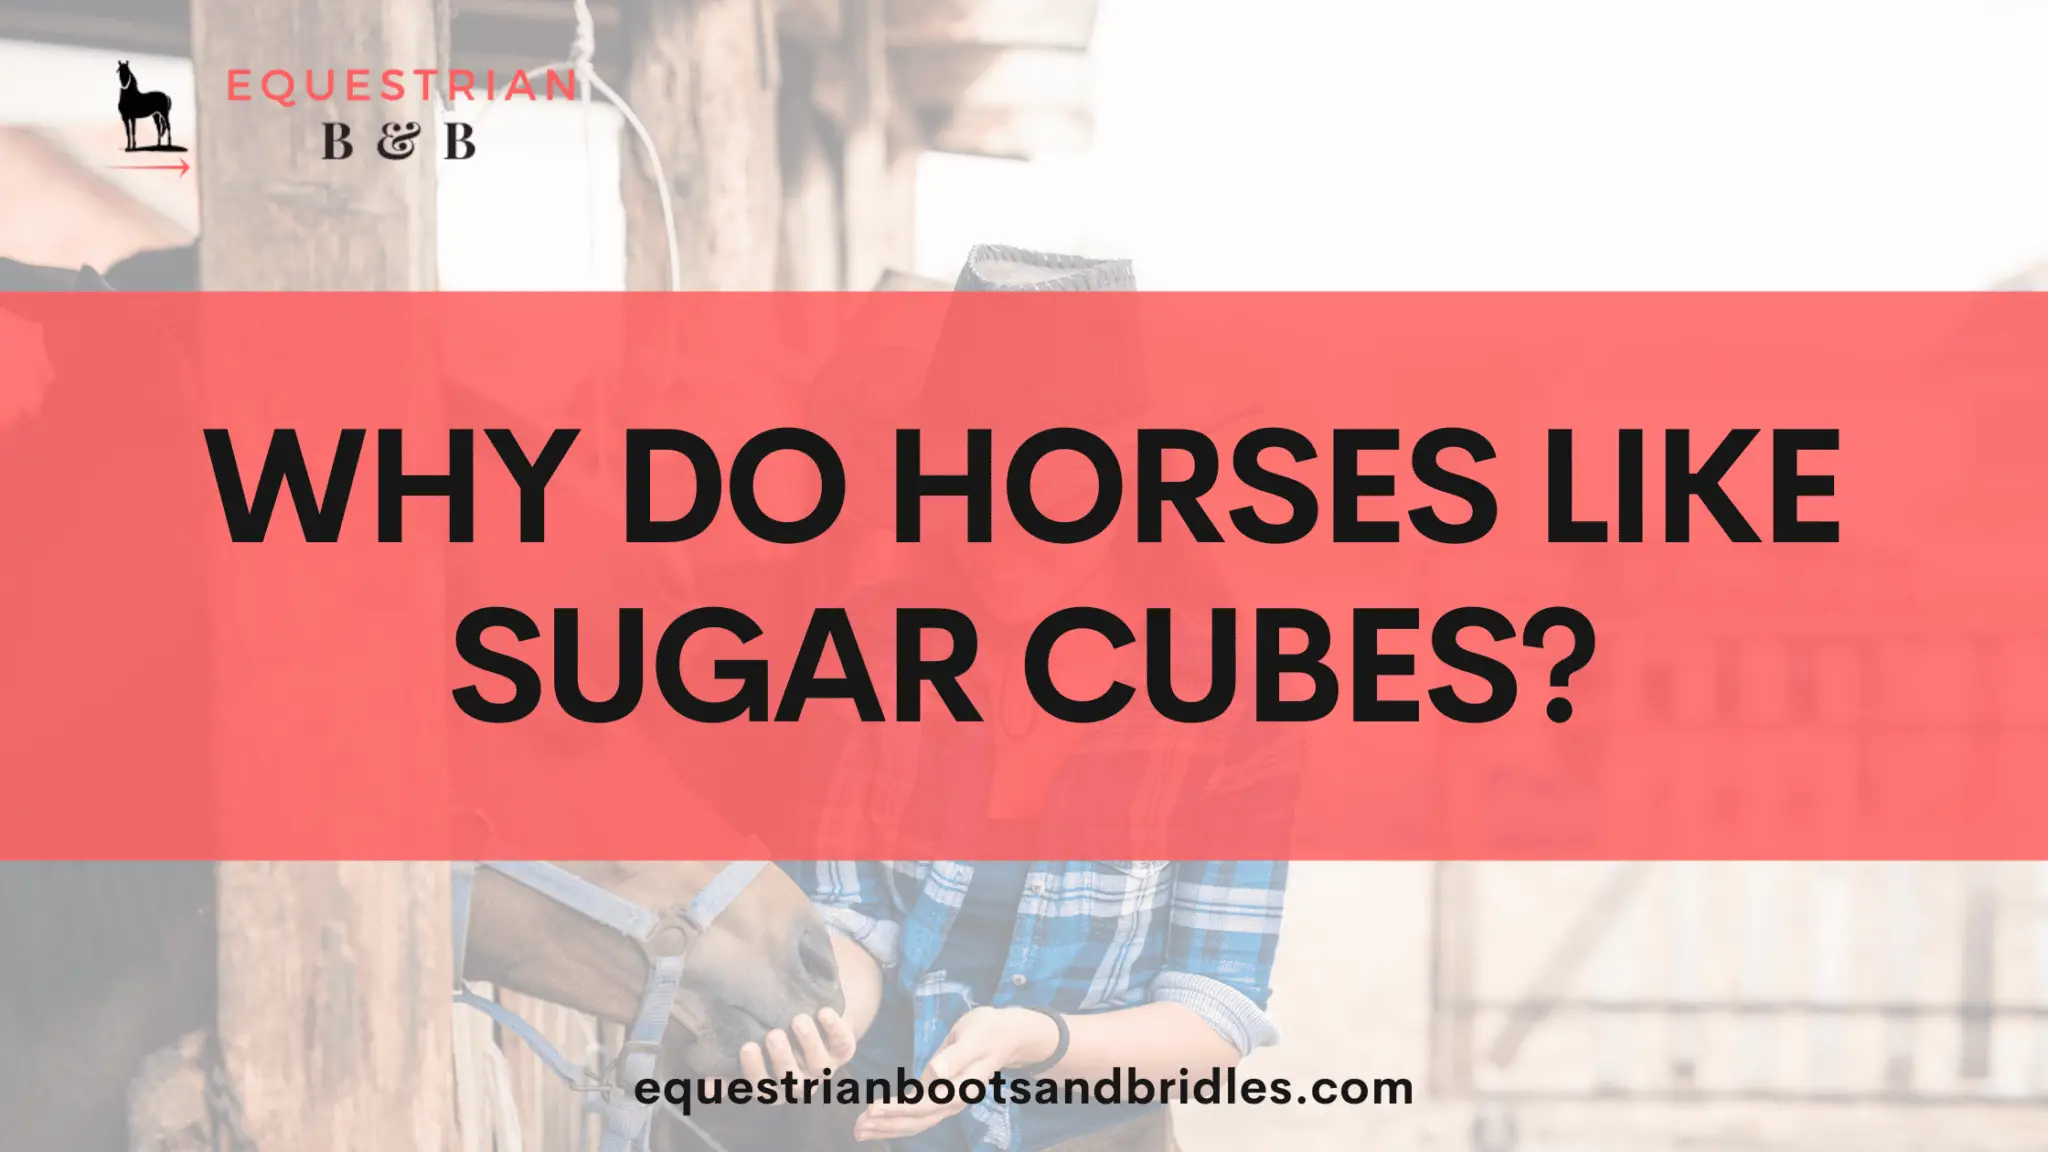 why do horses eat sugar cubes on equestrianbootsandbridles.com